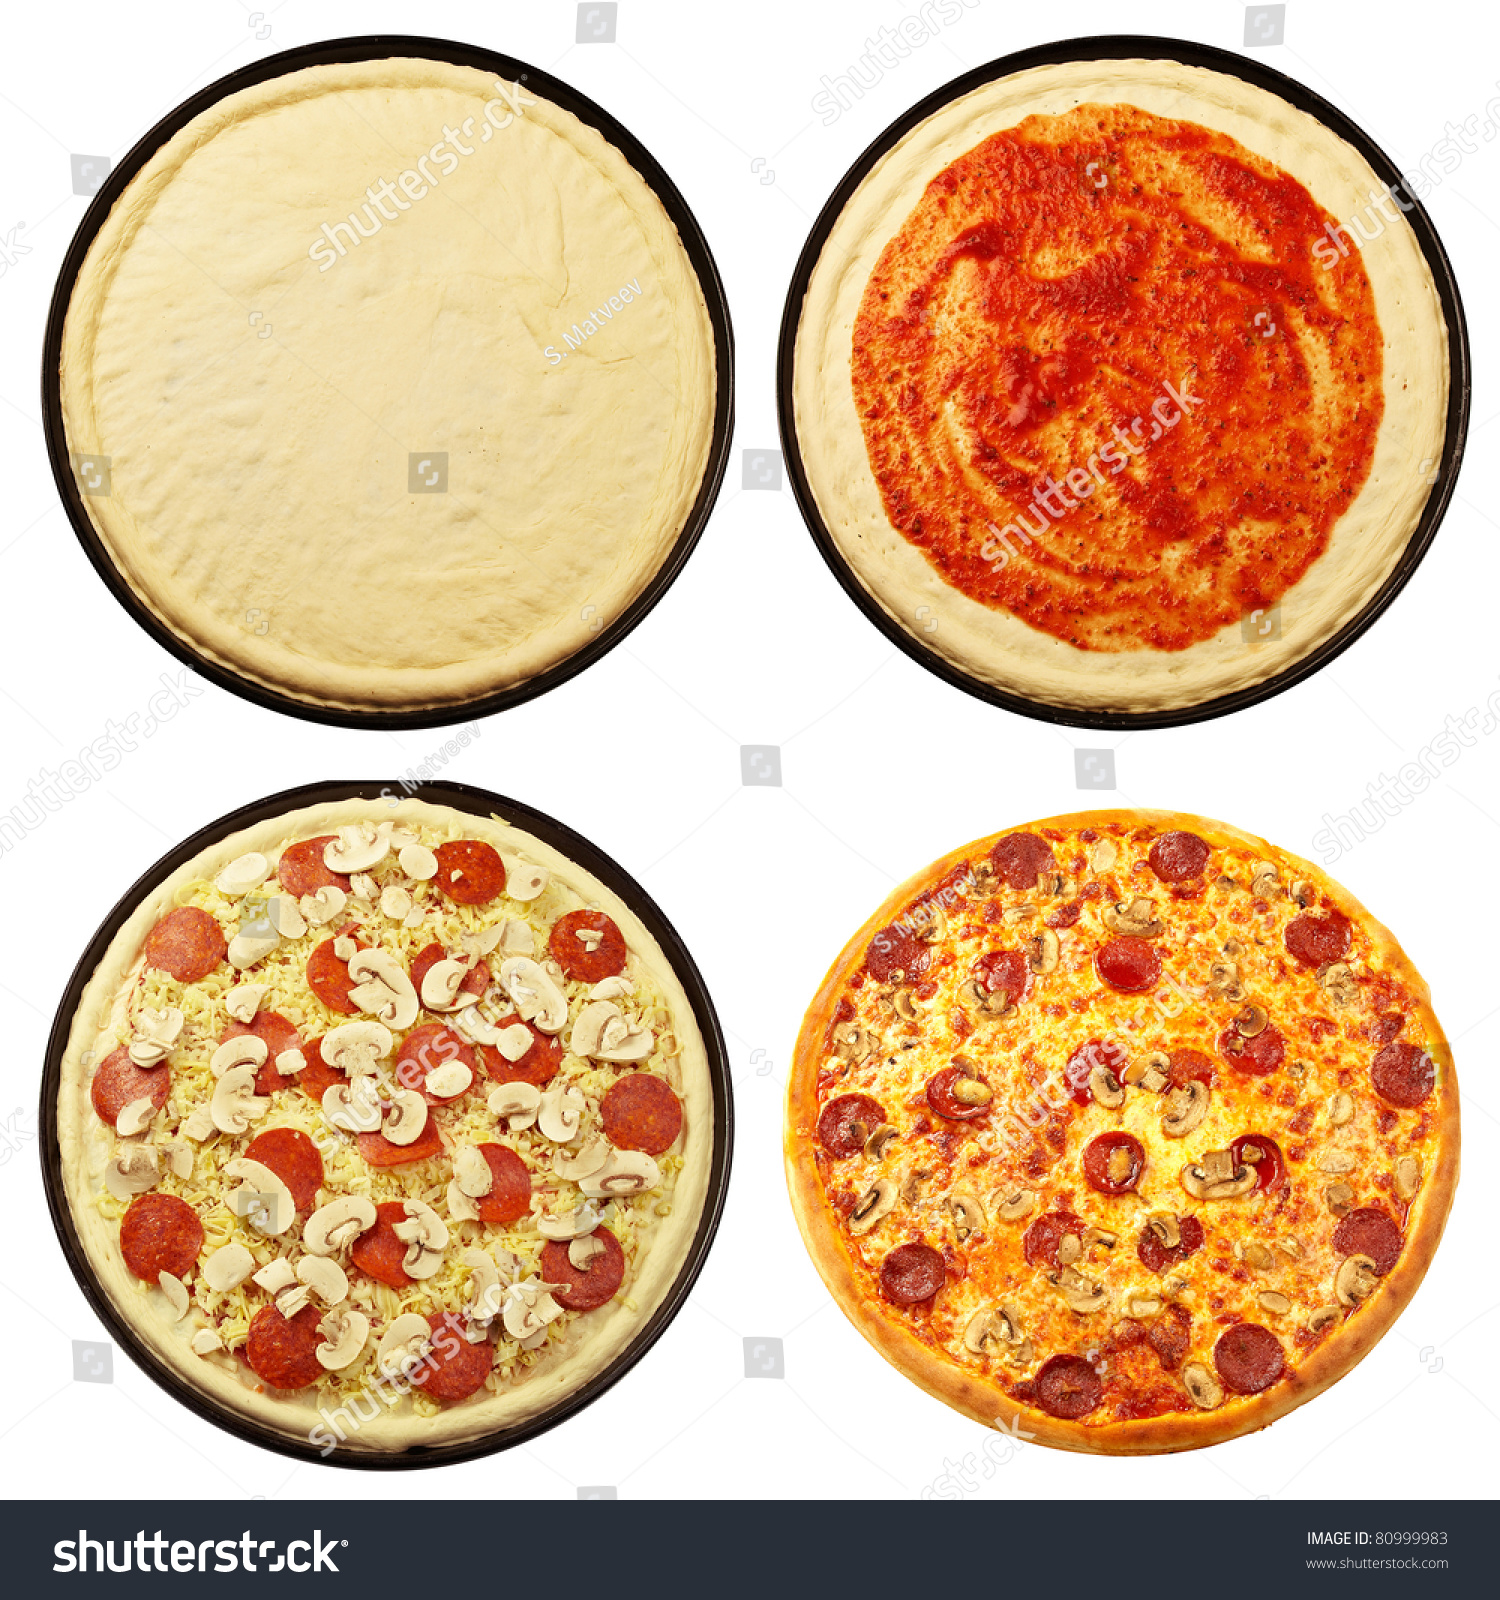 слои начинки пиццы (120) фото